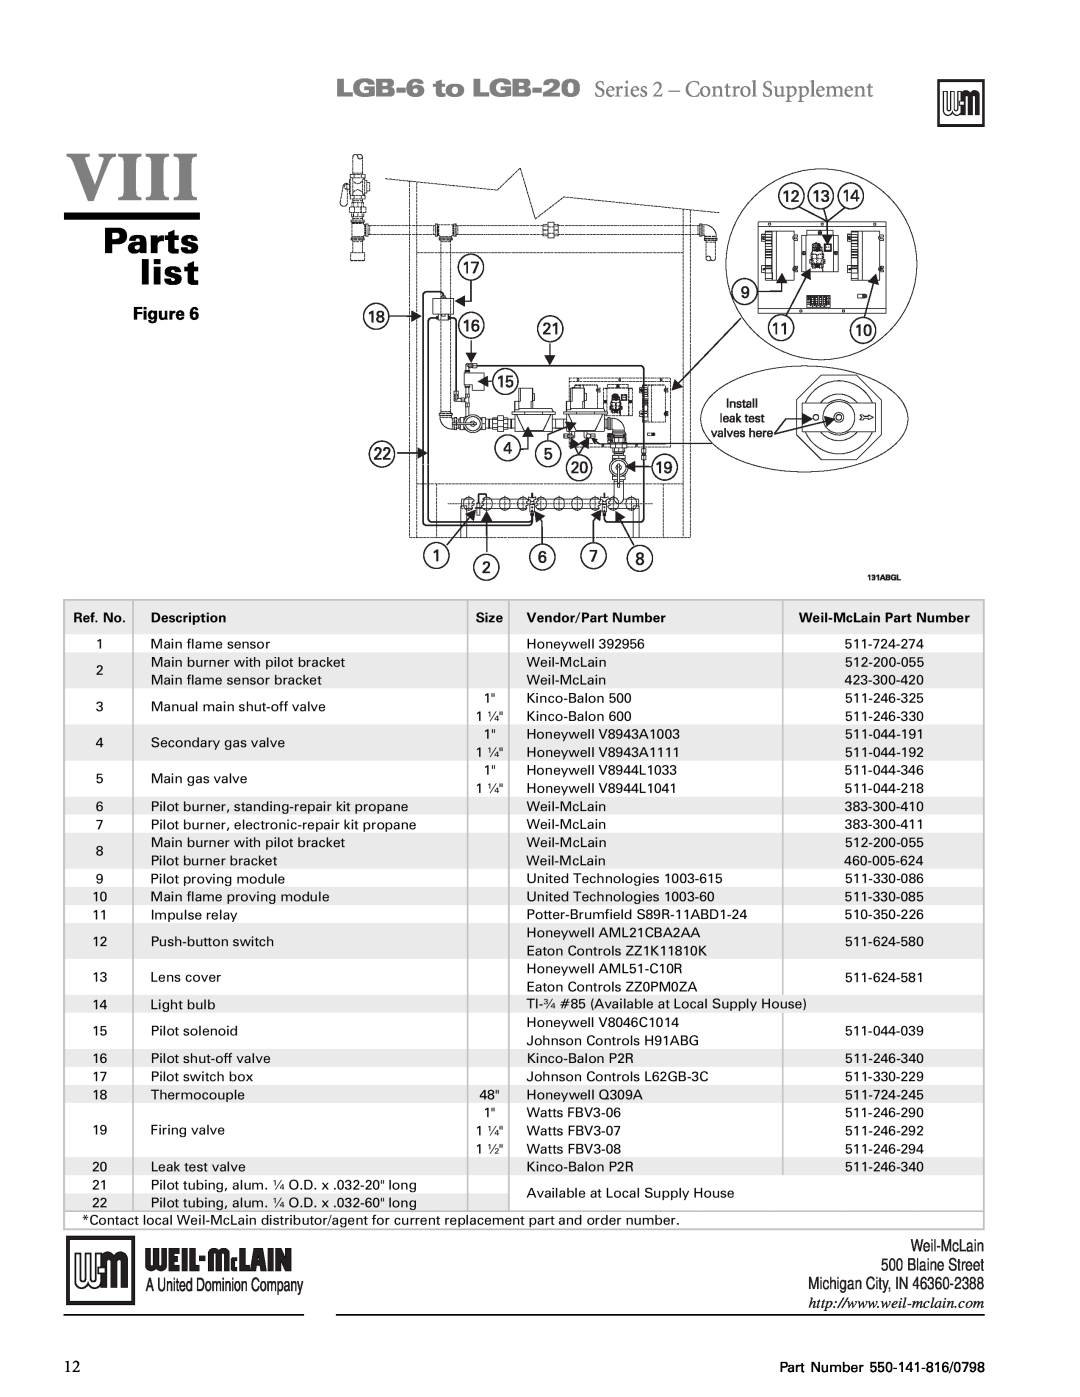 Weil-McLain 6-20 Series Parts list, Weil-McLain 500 Blaine Street Michigan City, IN, Viii, Part Number 550-141-816/0798 